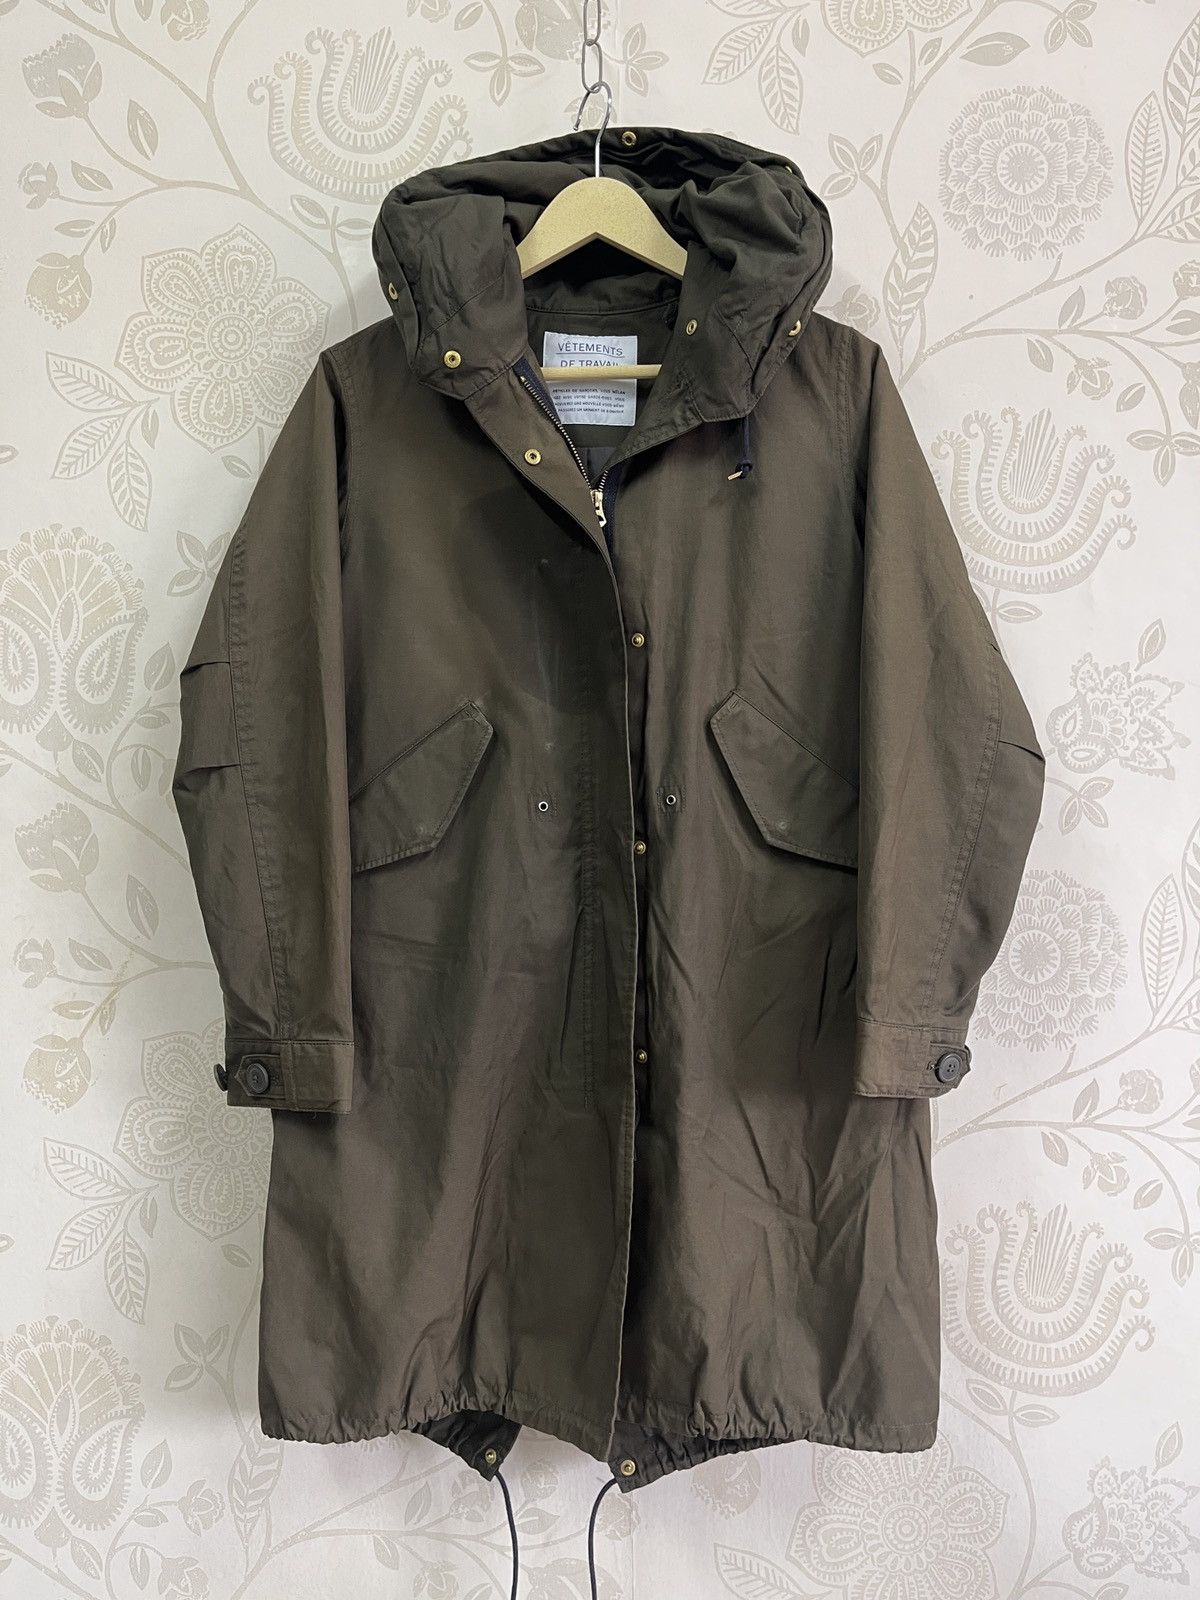 Japanese Brand - Vetements De Travail Long Parka Coat Fishtail Jacket Hooded - 21